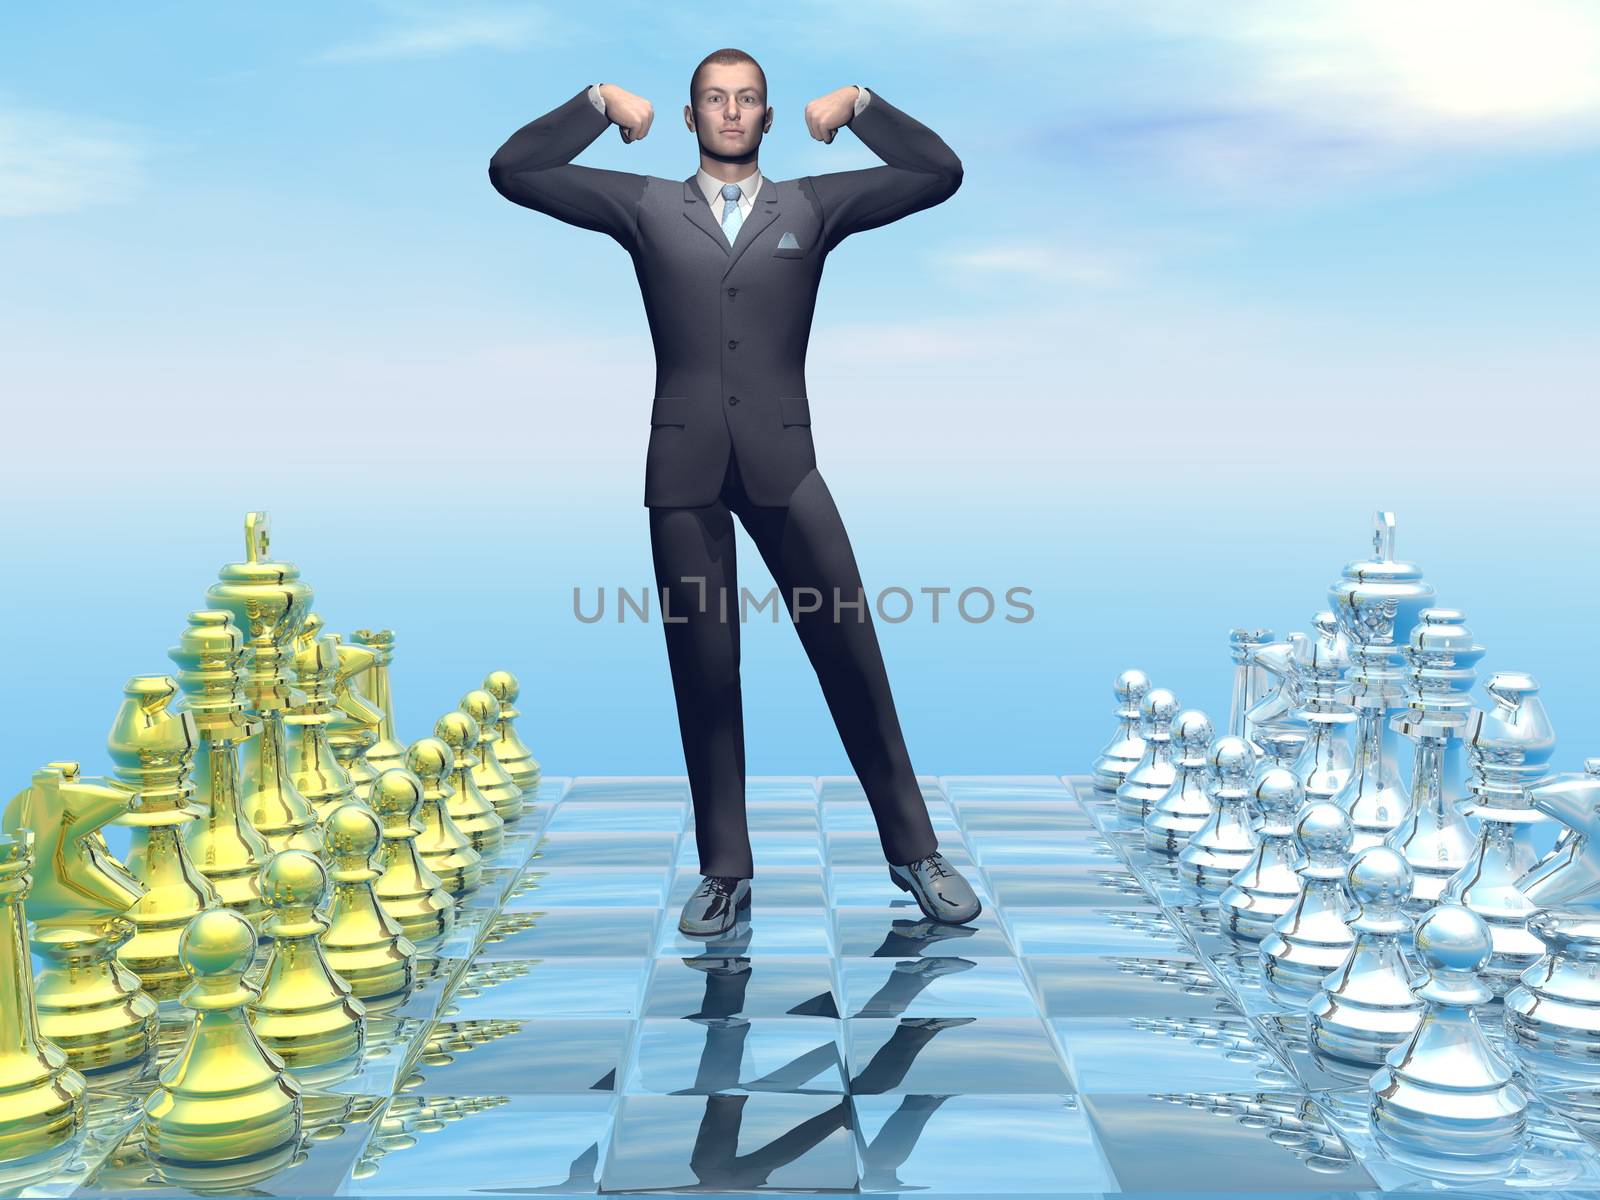 Businessman holding hands up as a winner on chessboard - 3D render